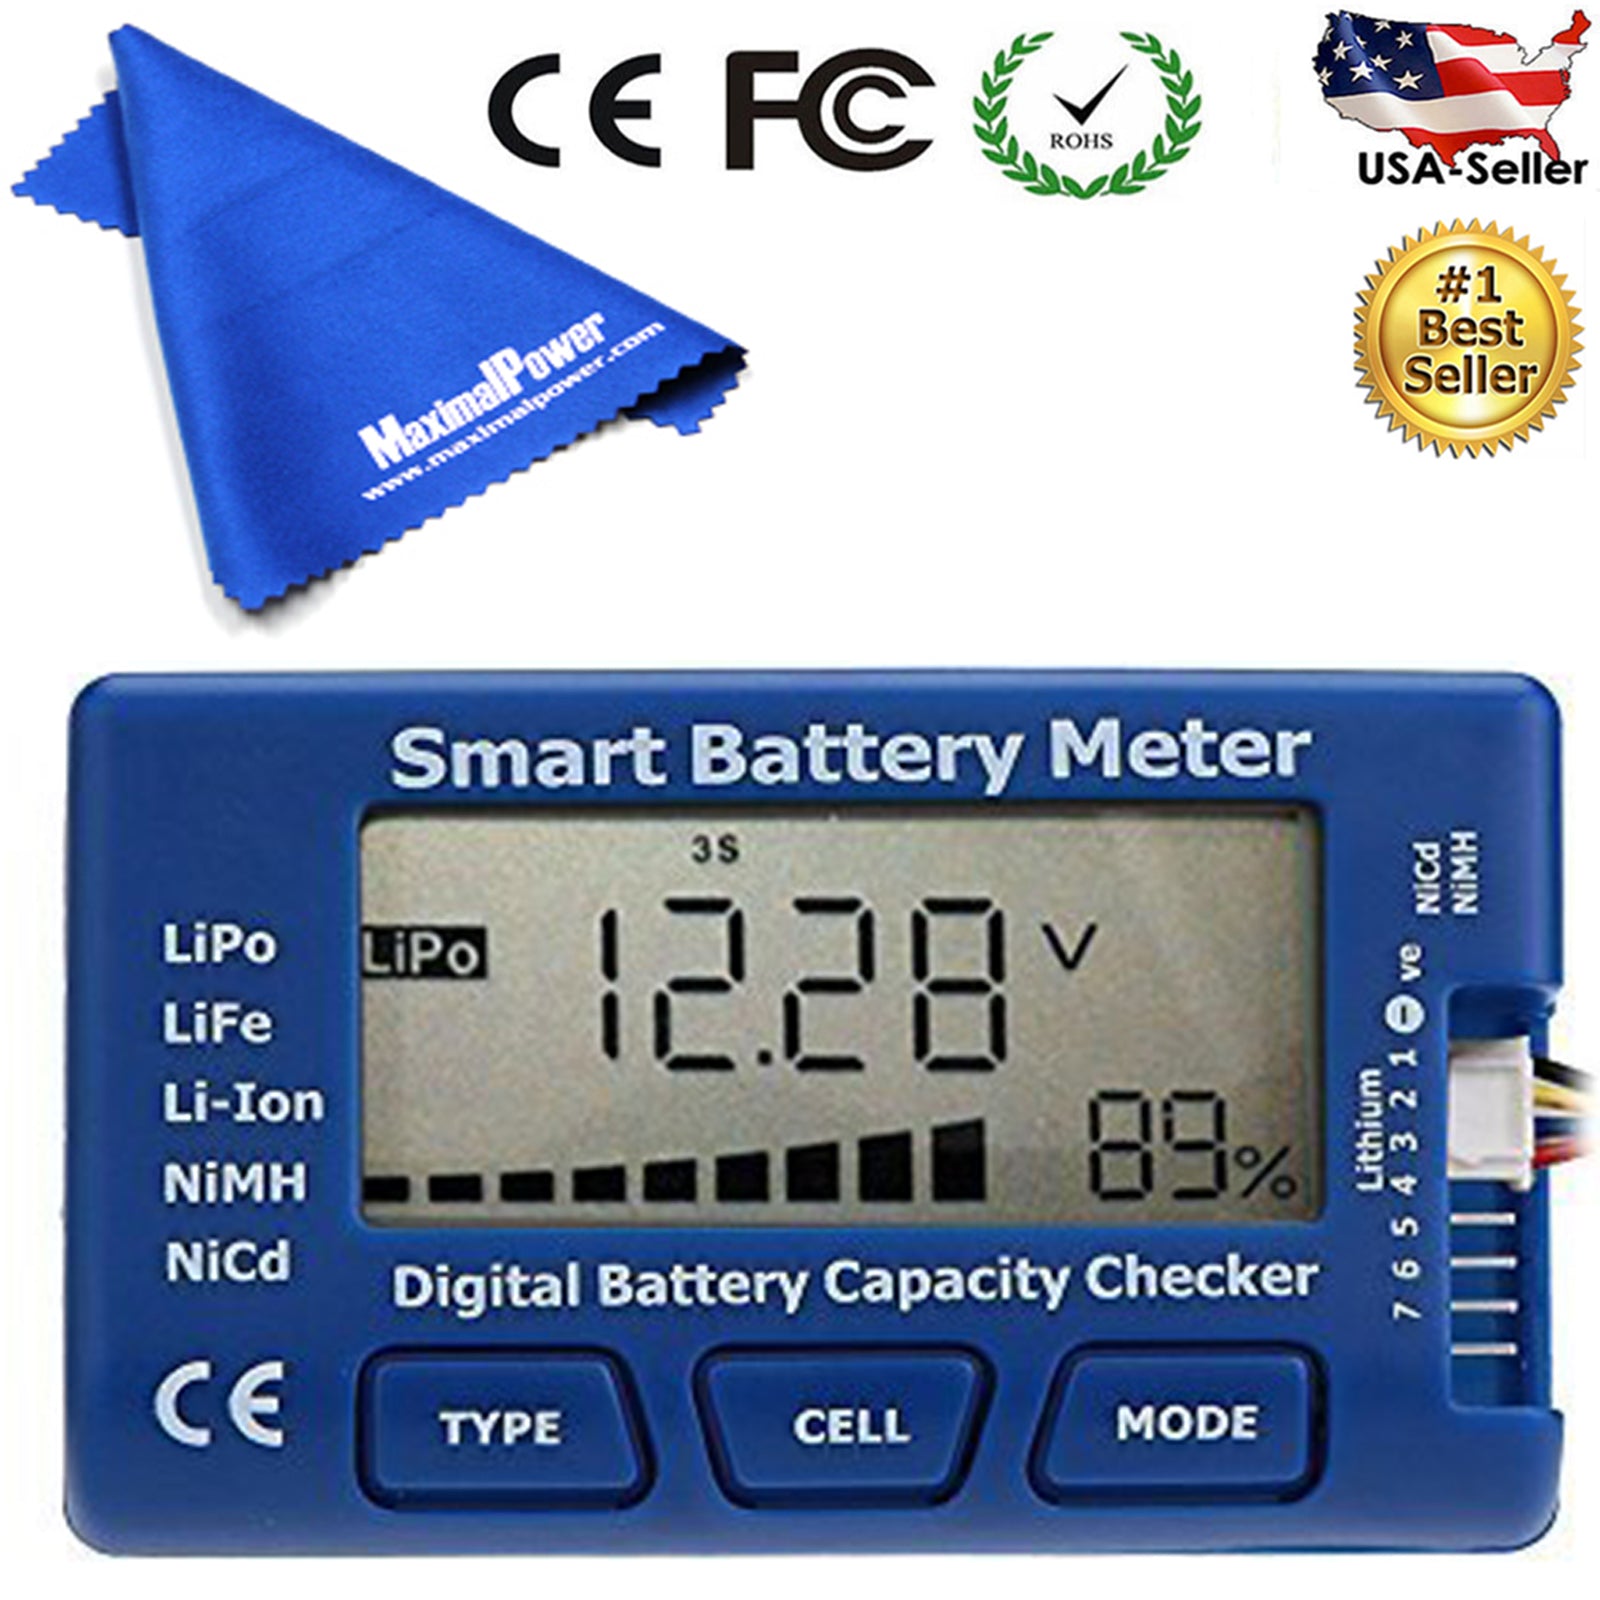 Battery meter. Smart Battery Tester. Измеритель баланса. Smart Battery Meter инструкция на русском языке.